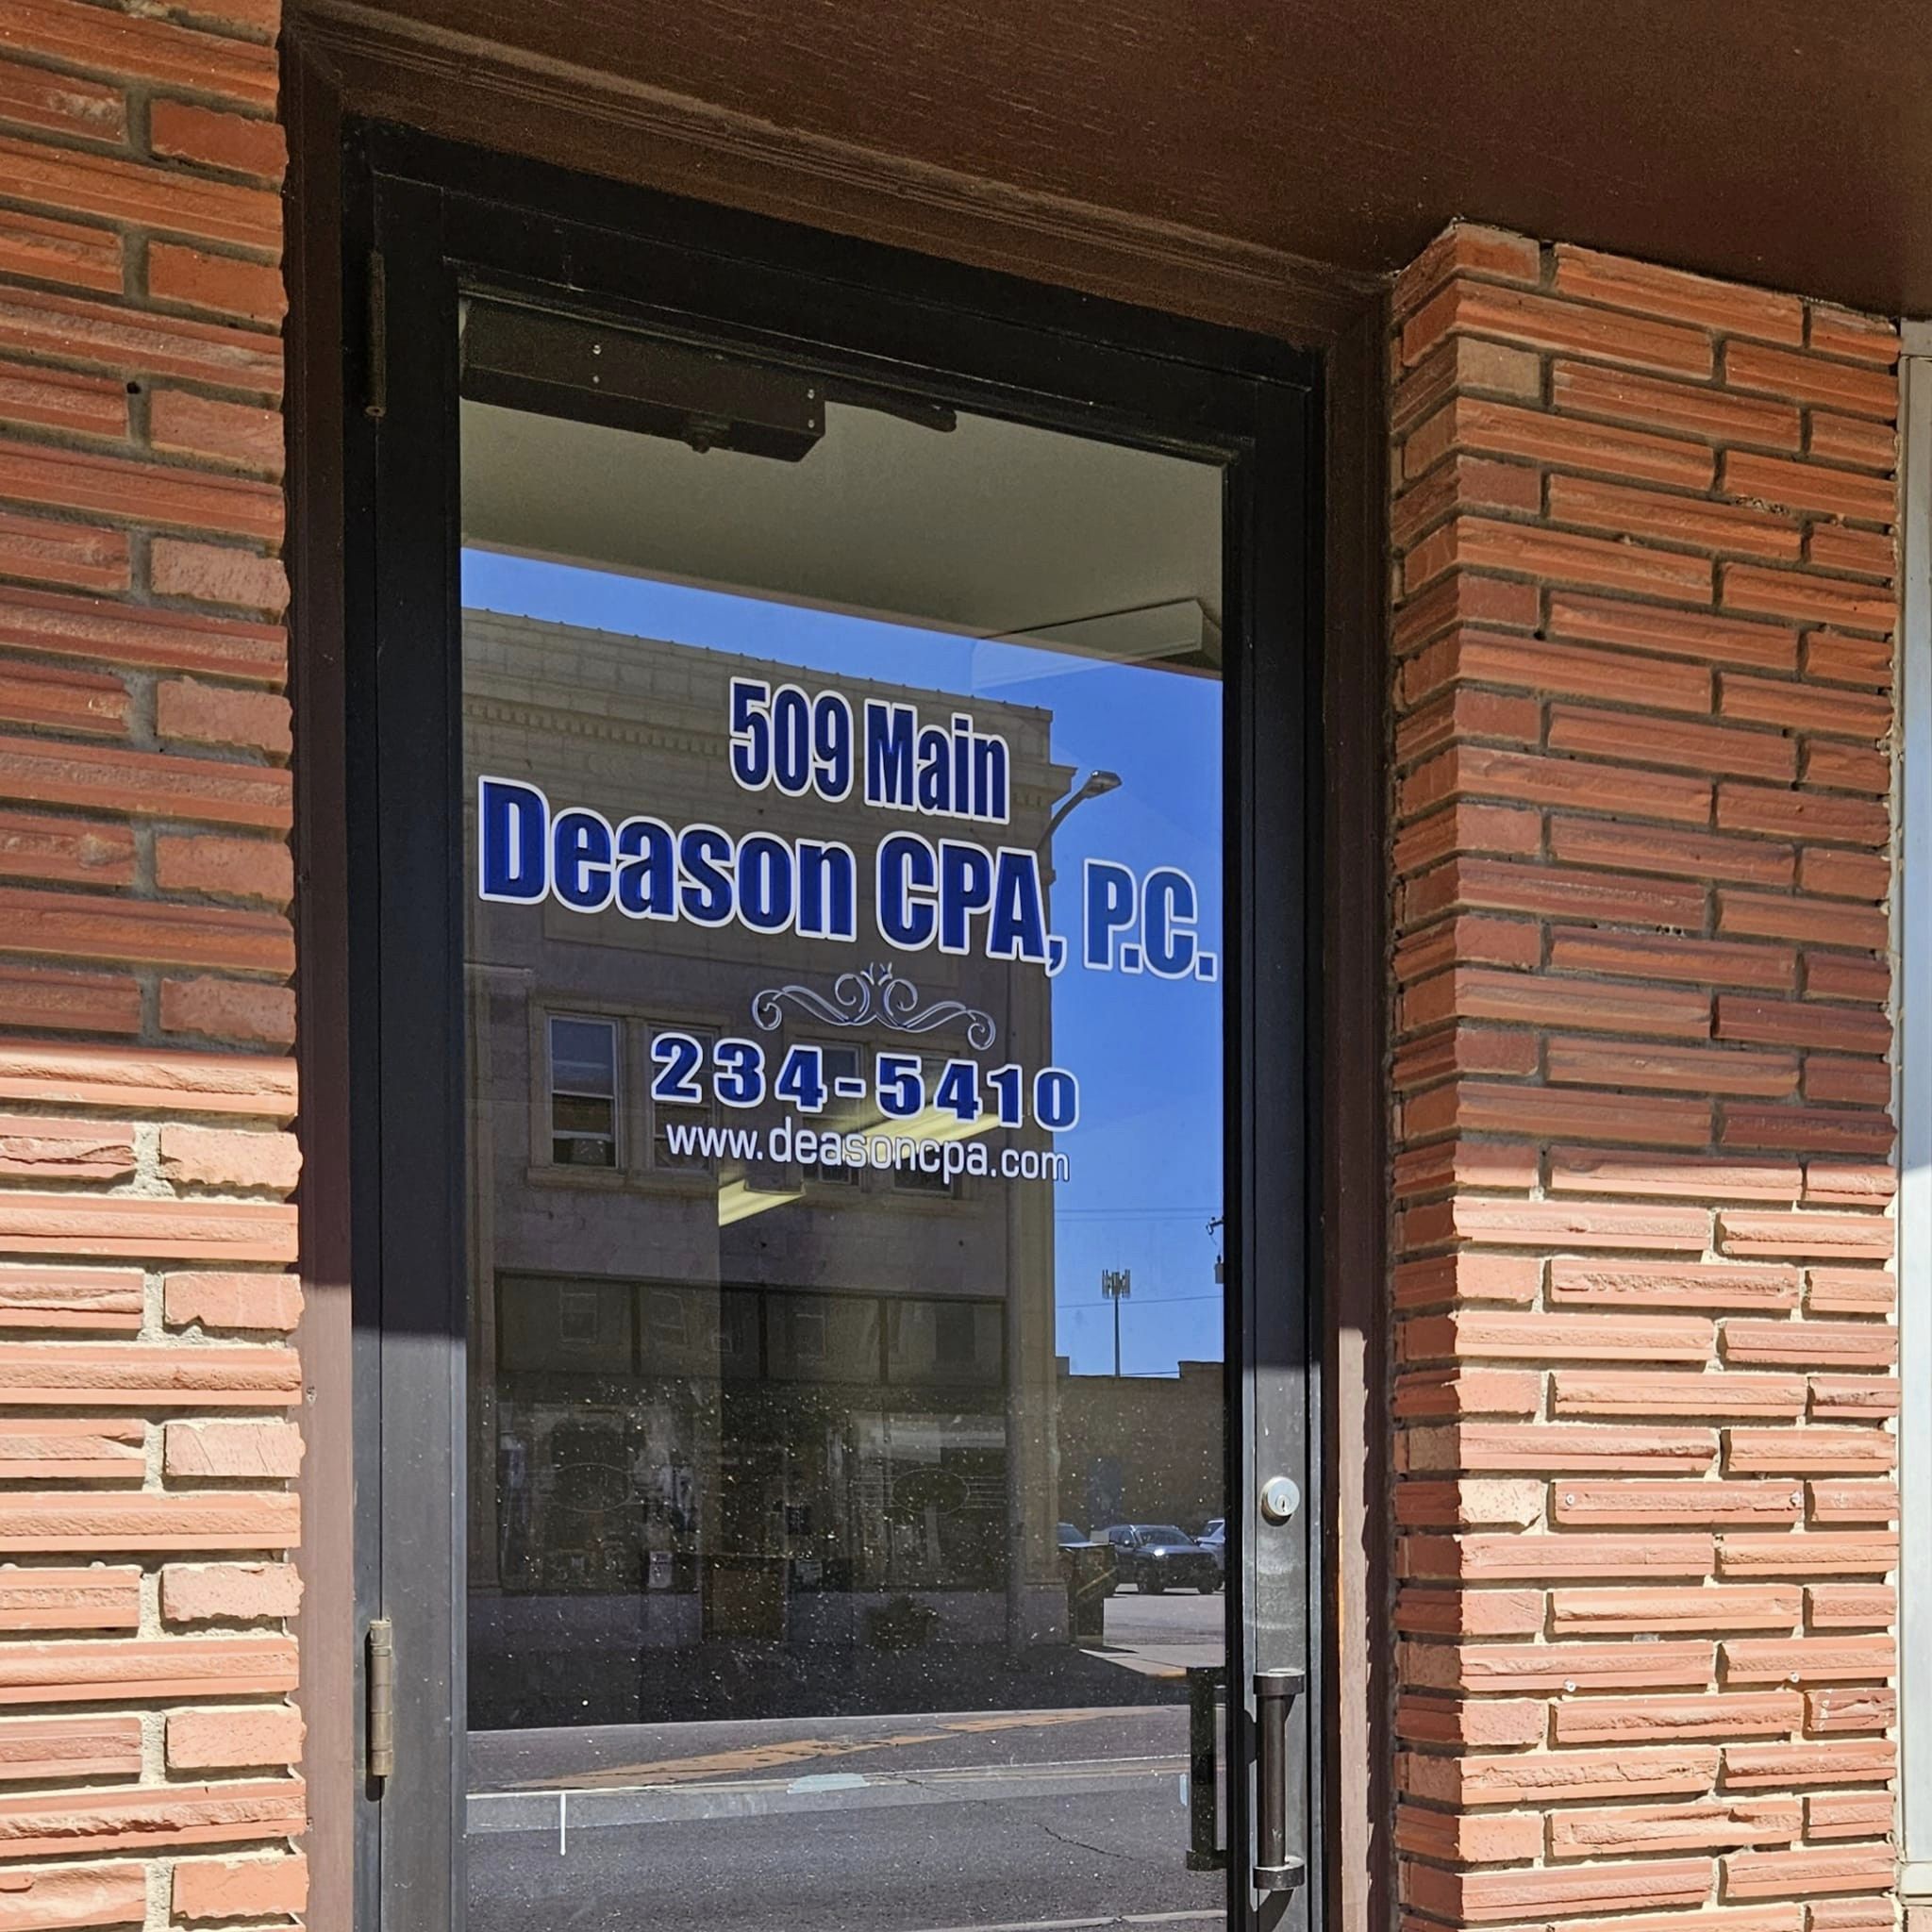 Deason CPA, P.C. 509 Main St, Miles City Montana 59301